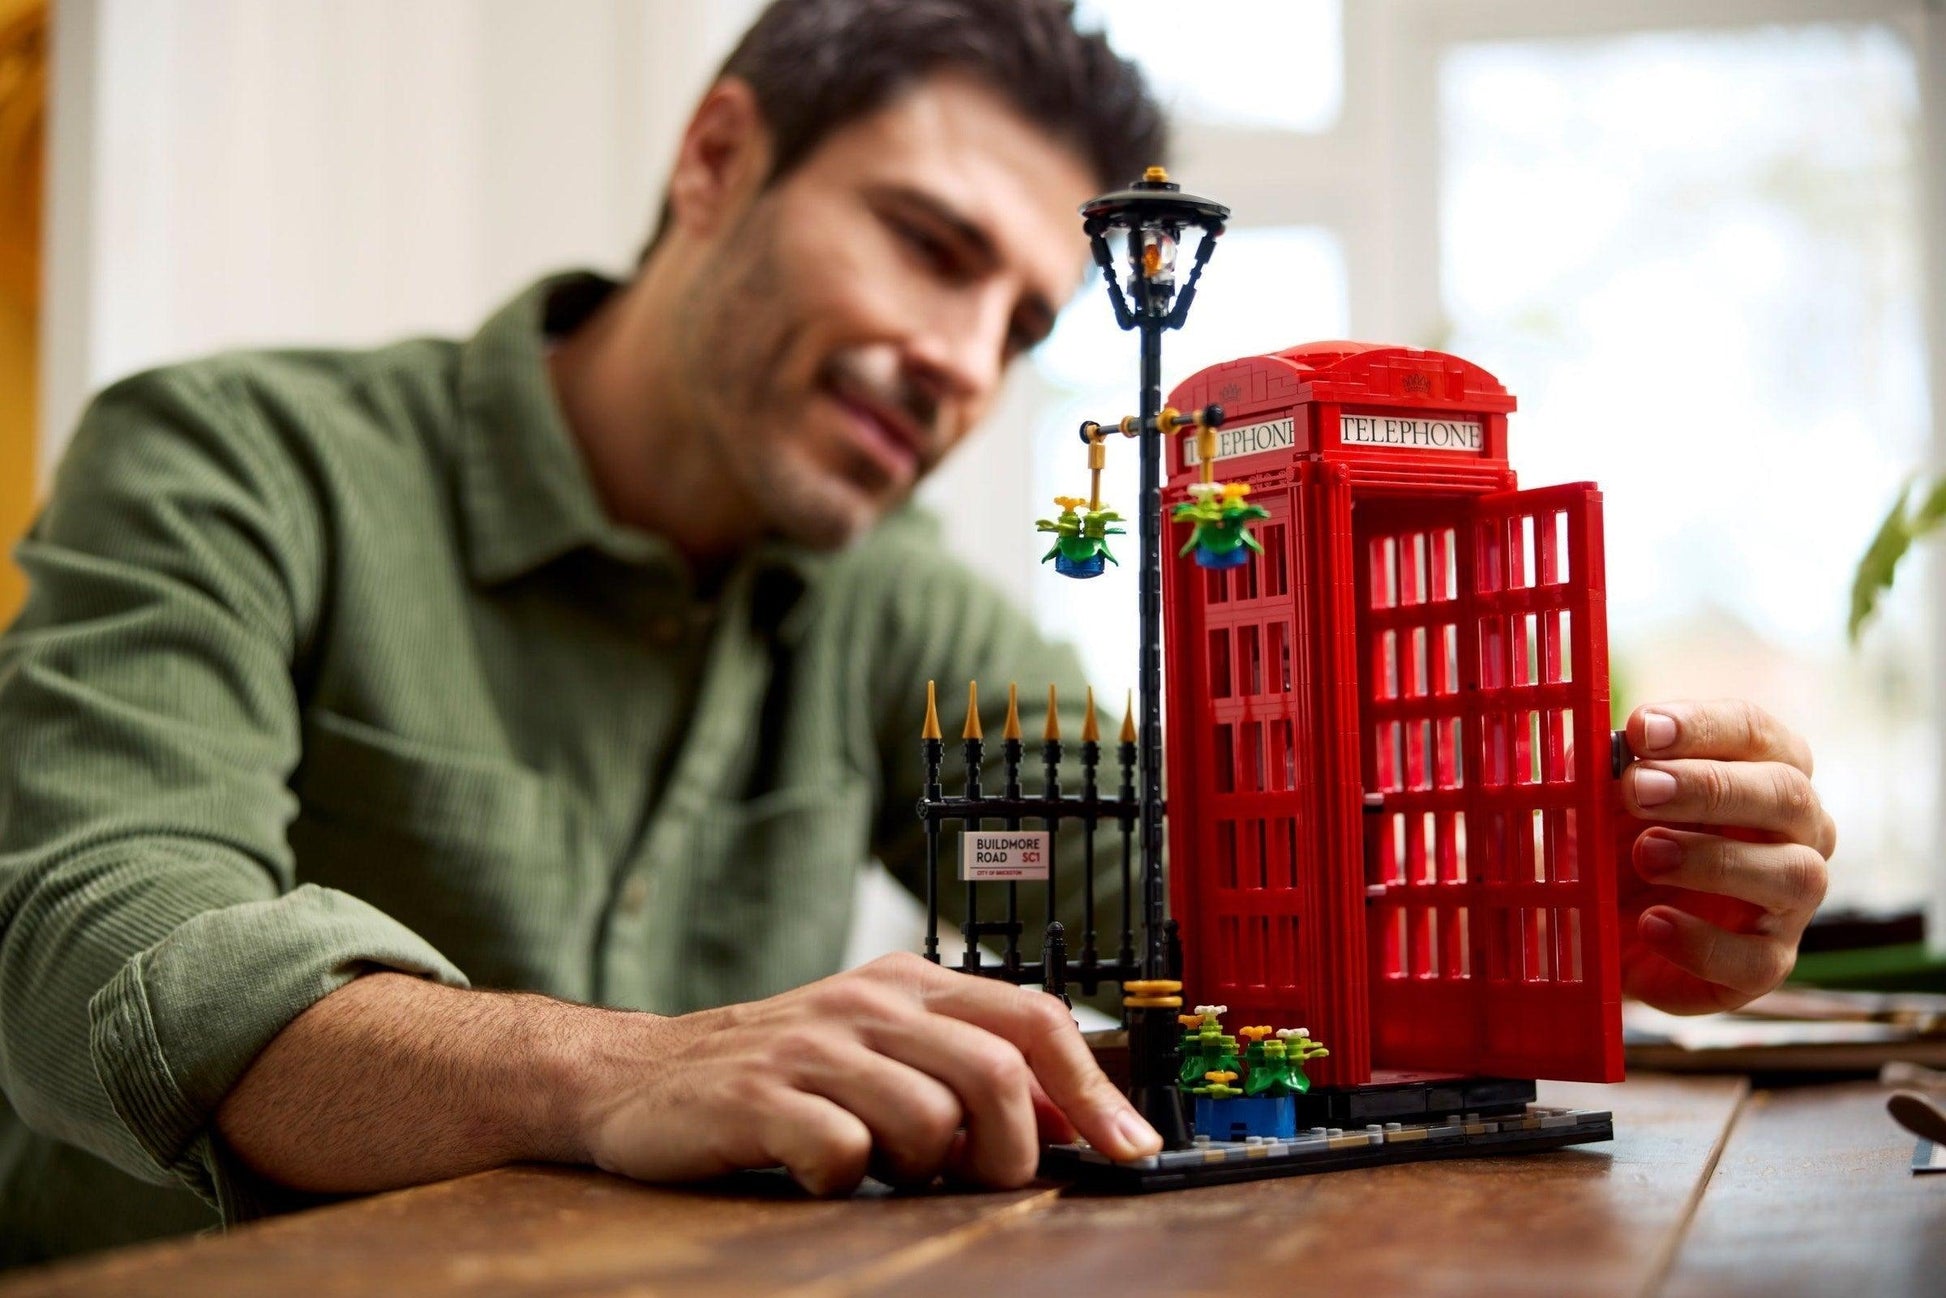 LEGO Red London Telephone Box 21347 Ideas @ 2TTOYS 2TTOYS €. 114.99